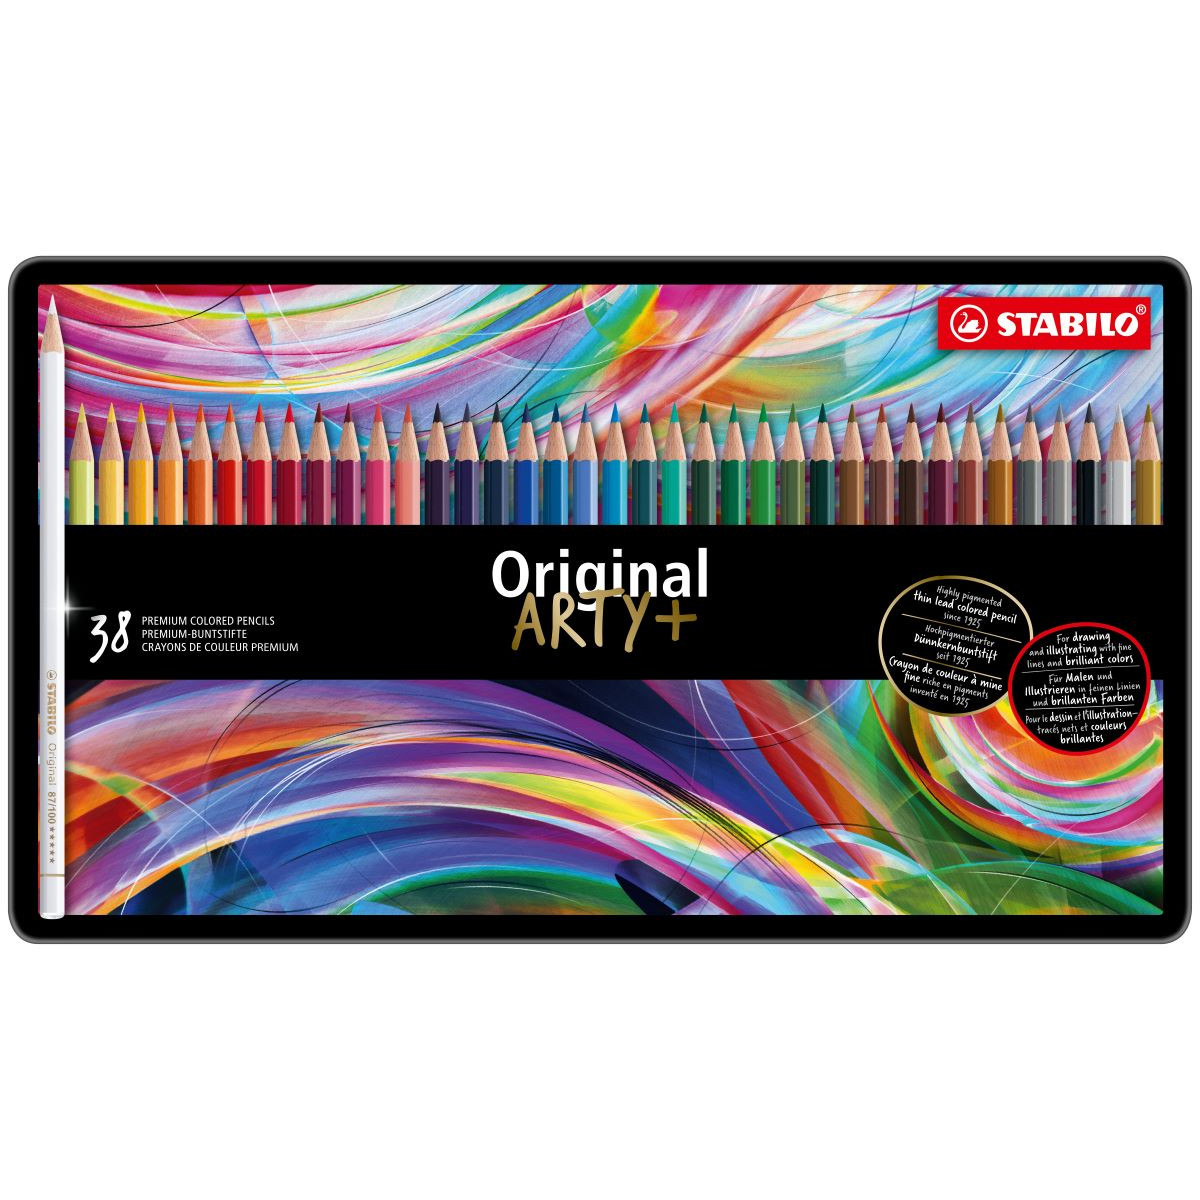 STABILO Original Colouring Pencils - ARTY - Assorted Colours (Tin of 38)